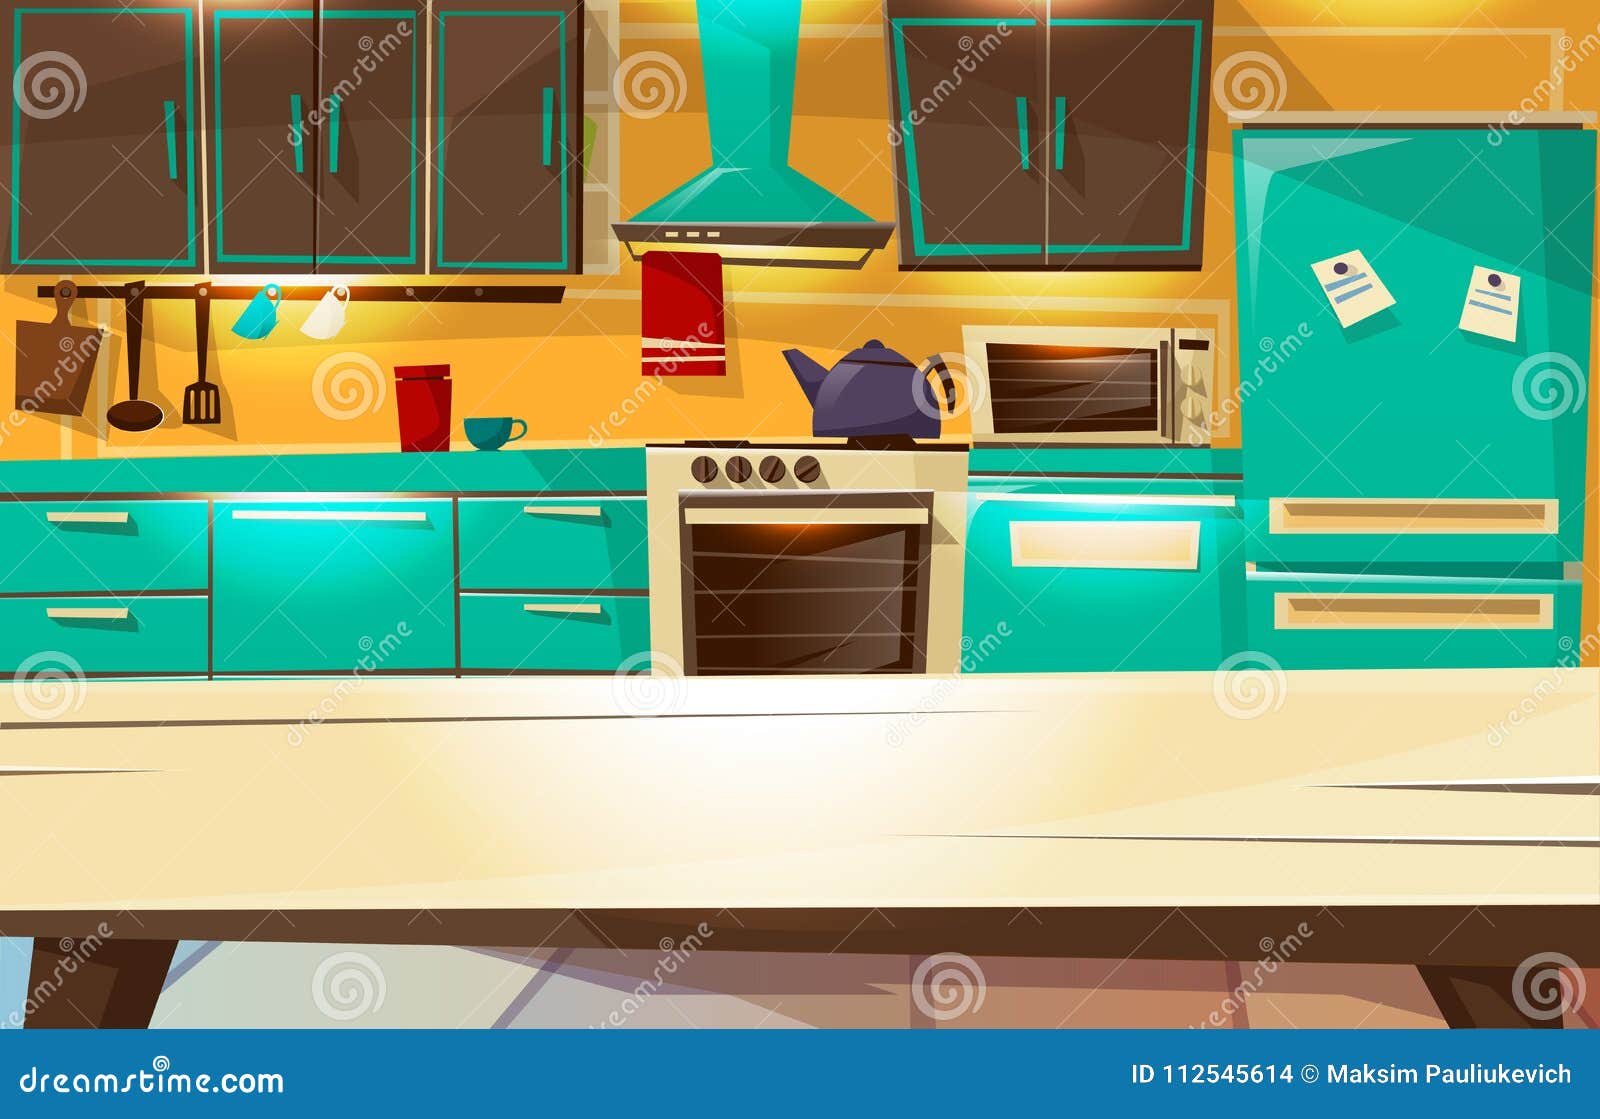 Kitchen Interior Background Vector Cartoon Illustration Of Modern